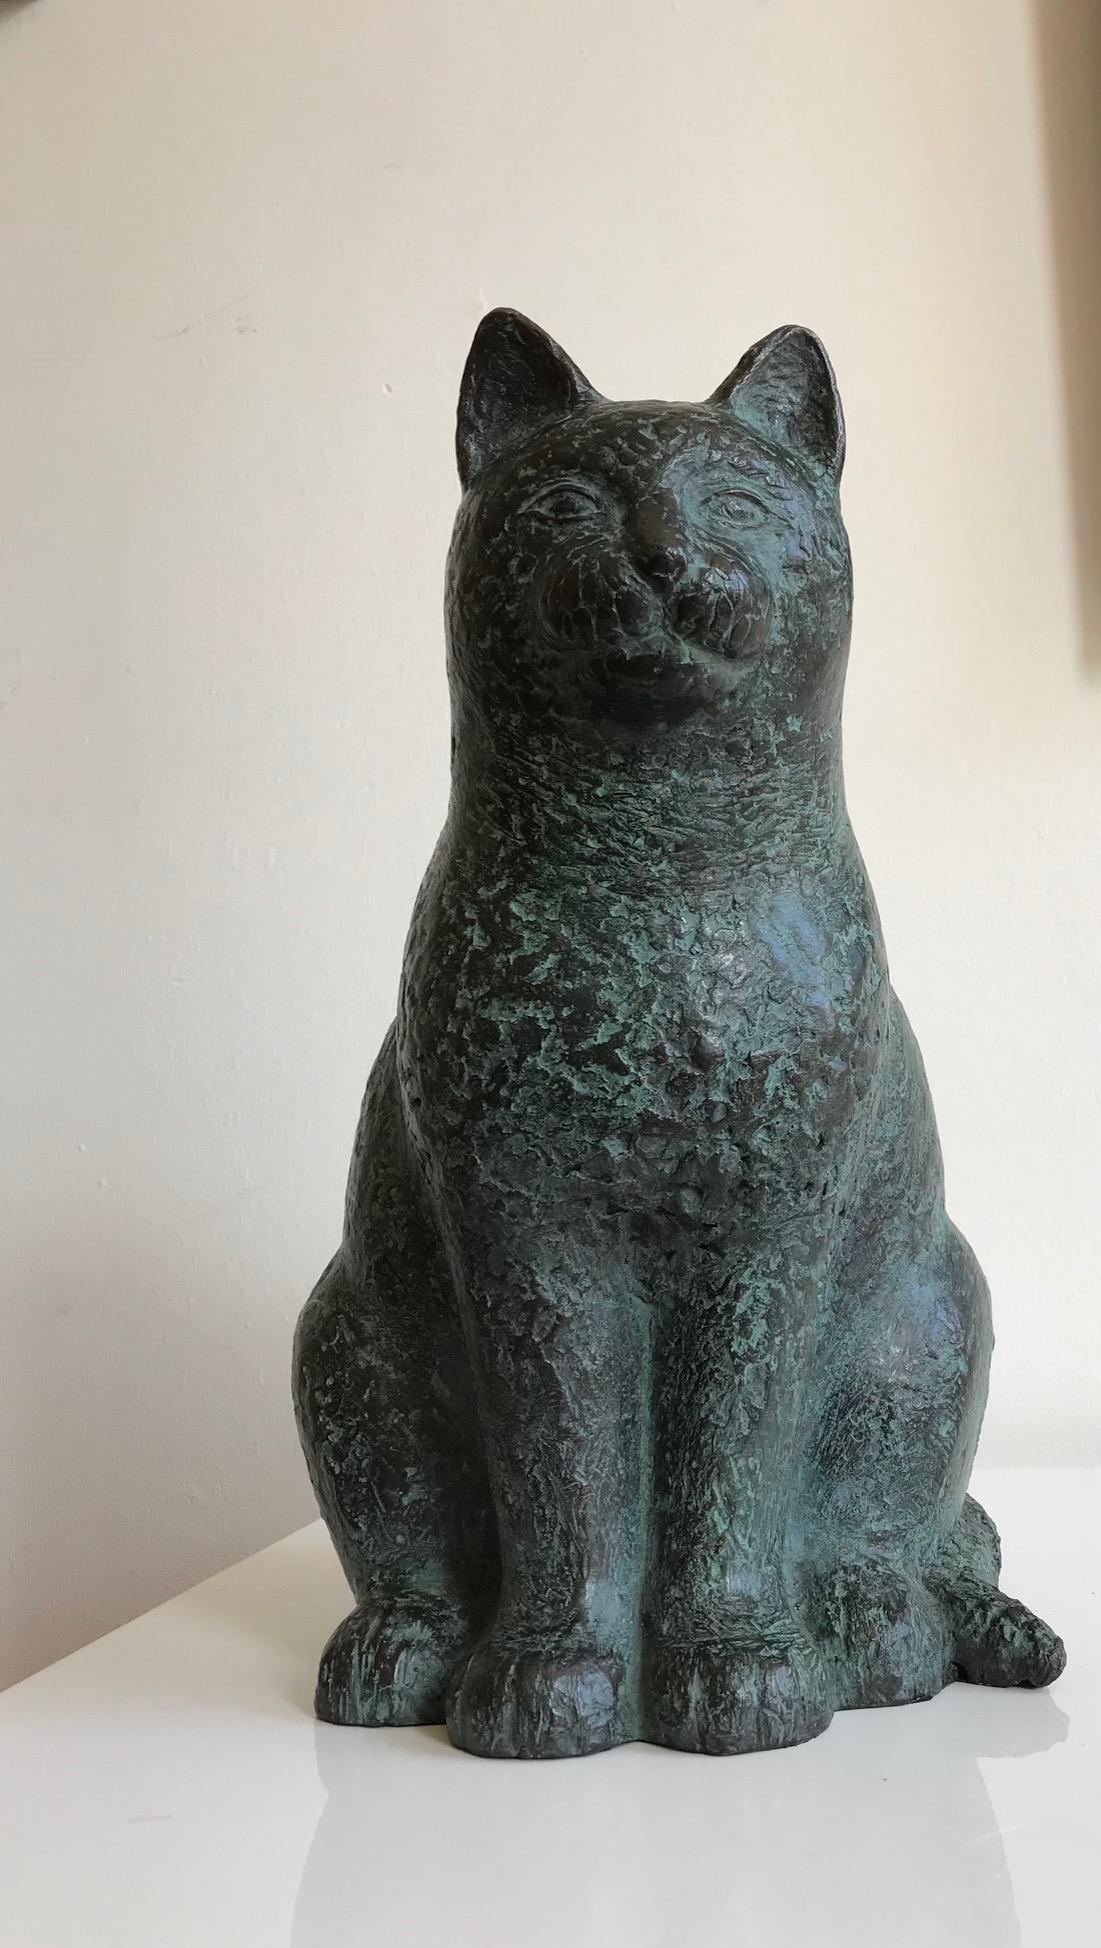 Karin Beek Figurative Sculpture - ''Sitting Cat'' Dutch Contemporary Bronze Sculpture of Cat, Feline